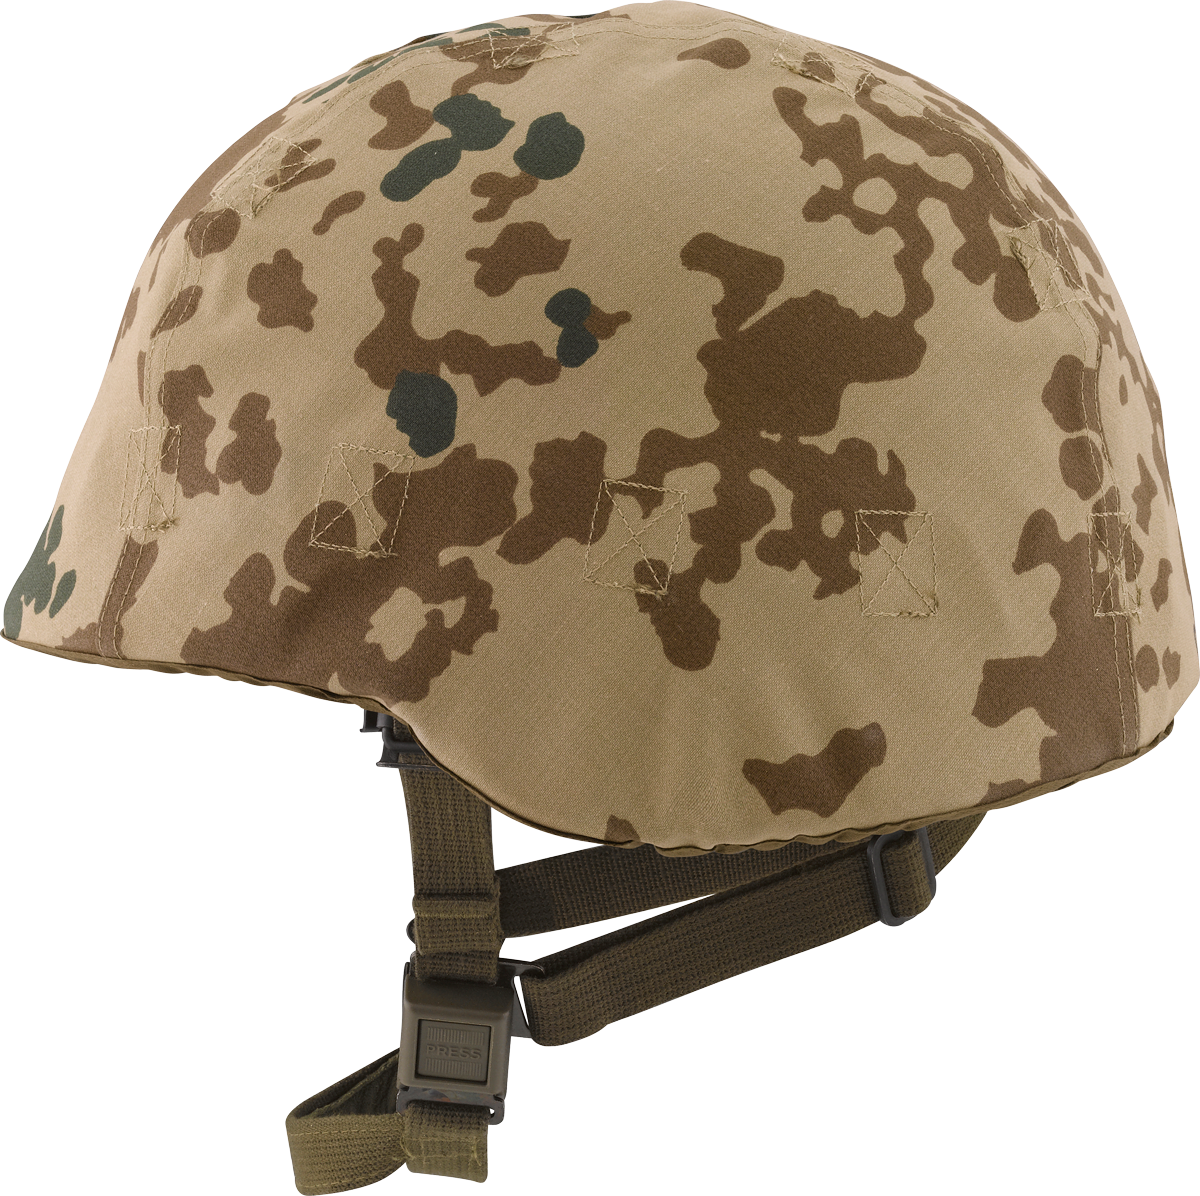 Military helmet png. Kortnee kate photography